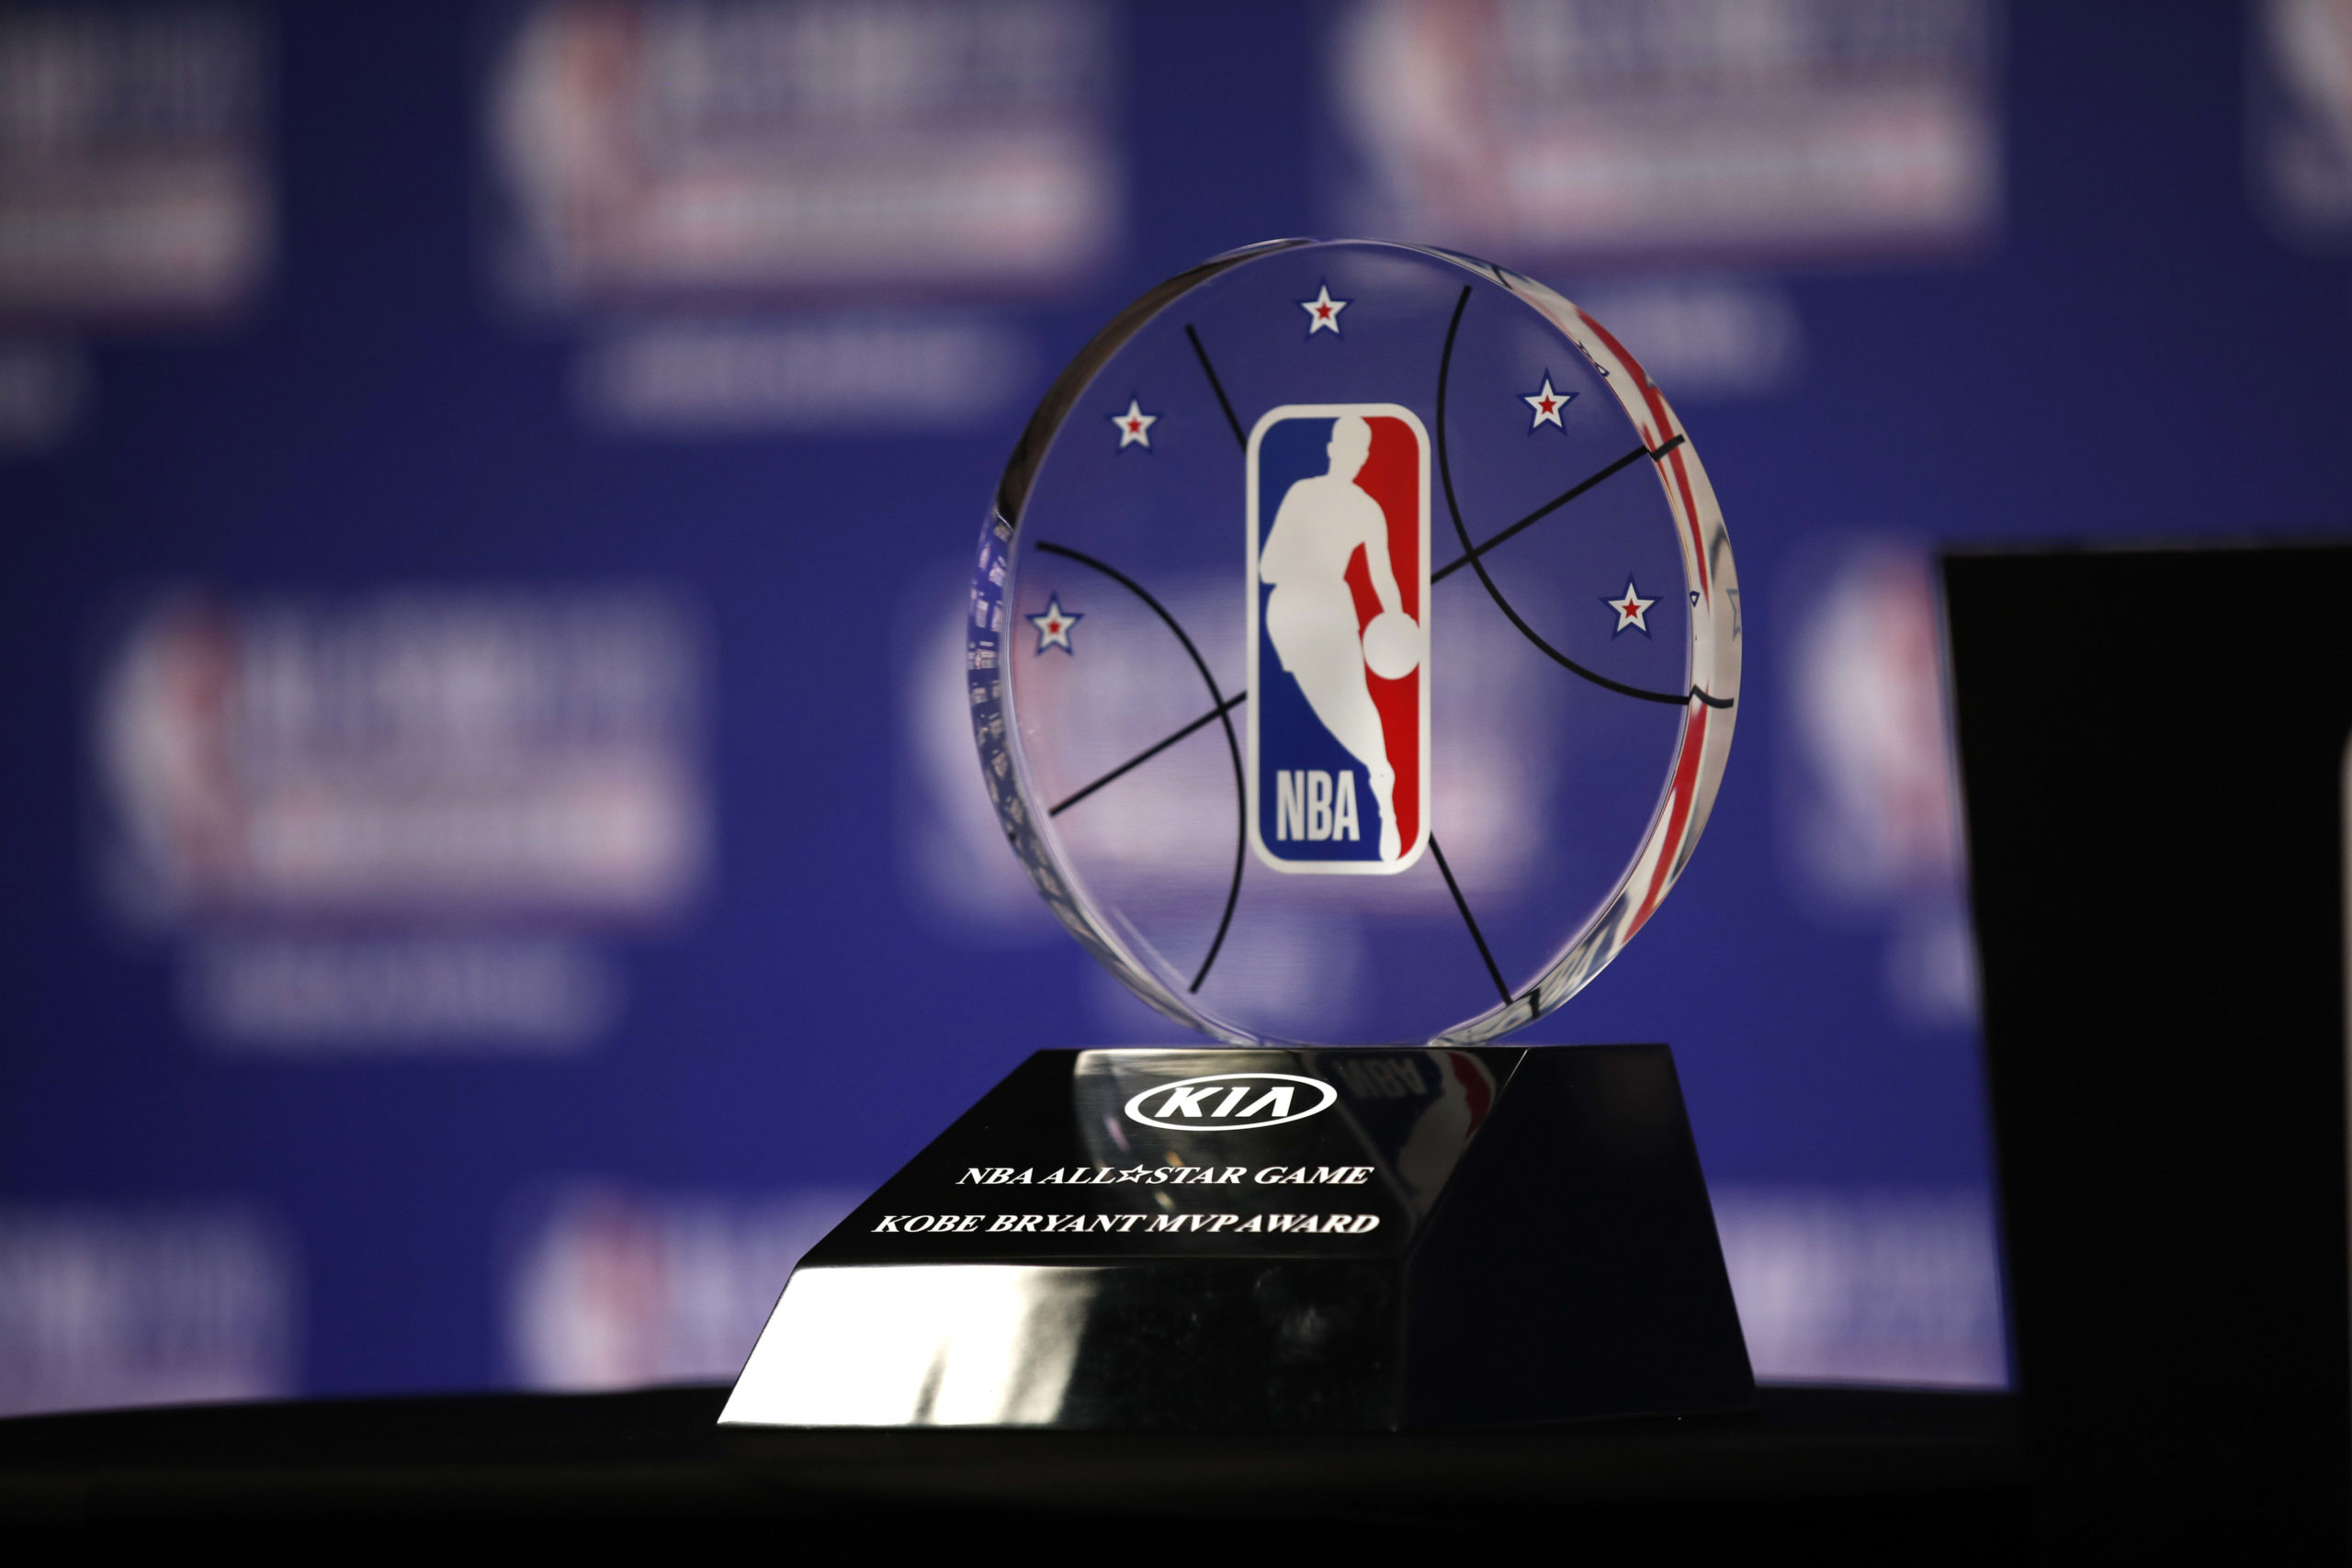 Kawhi Leonard wins first NBA All-Star MVP award named after Kobe Bryant